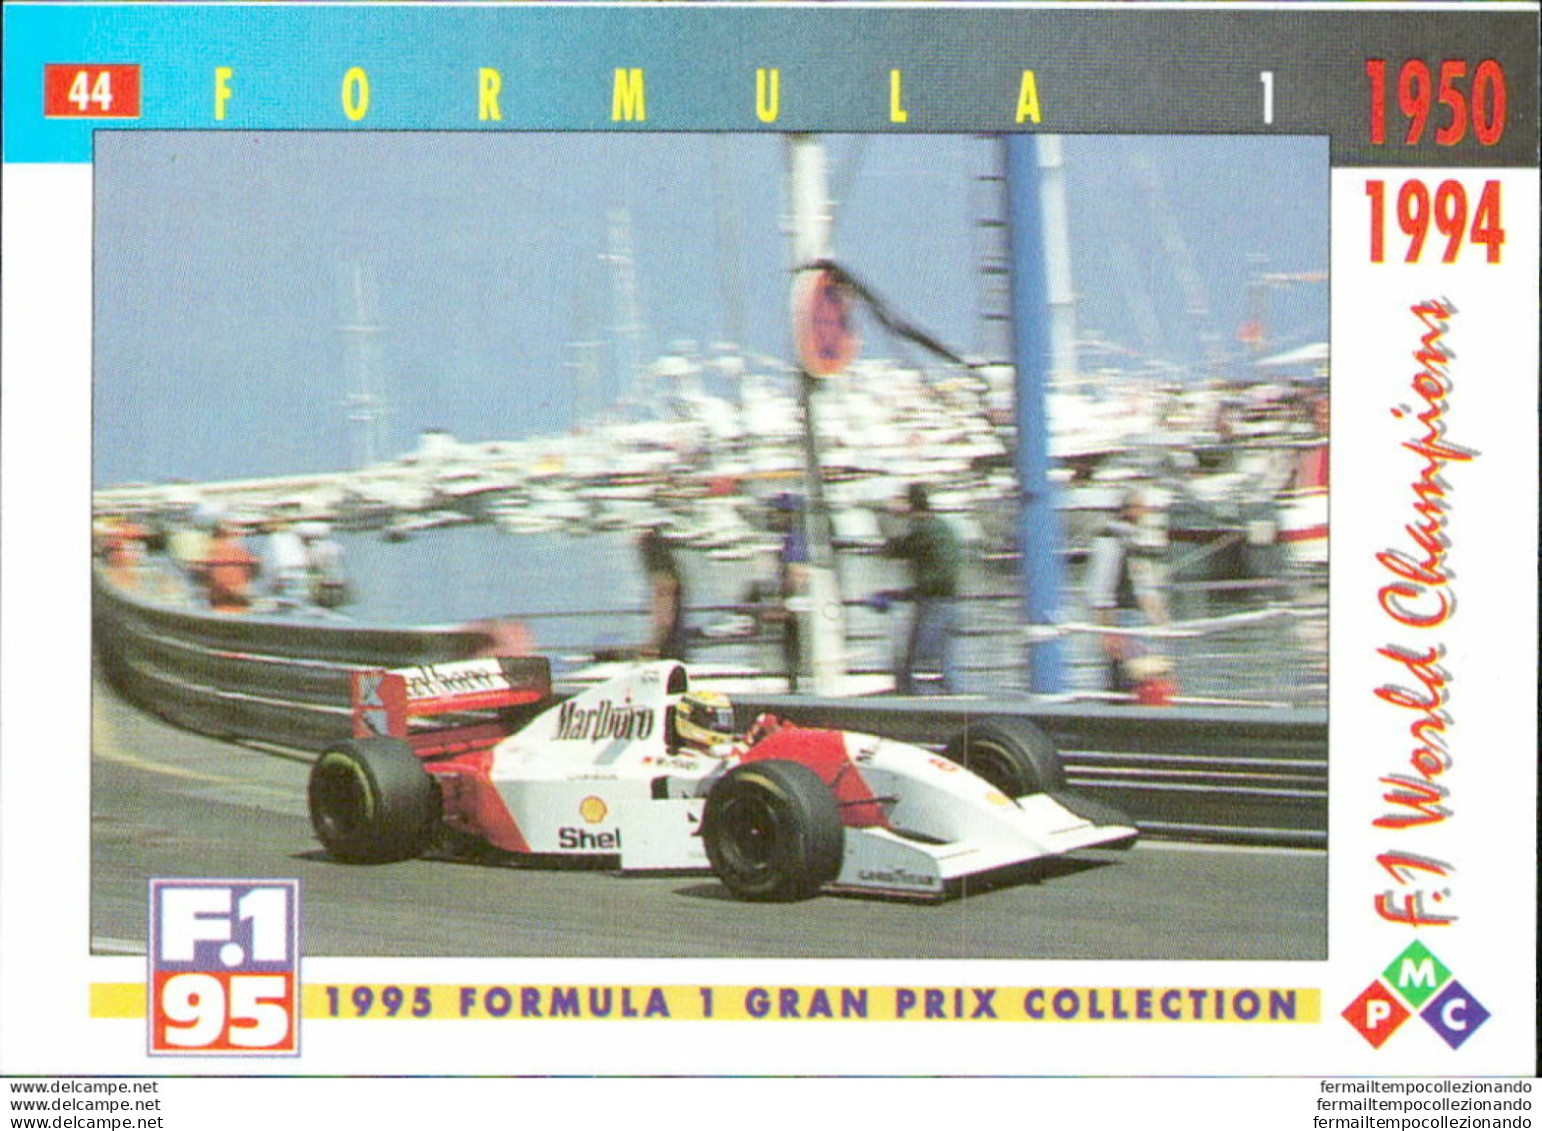 Bh44 1995 Formula 1 Gran Prix Collection Card F.1 World Champions N 44 - Kataloge